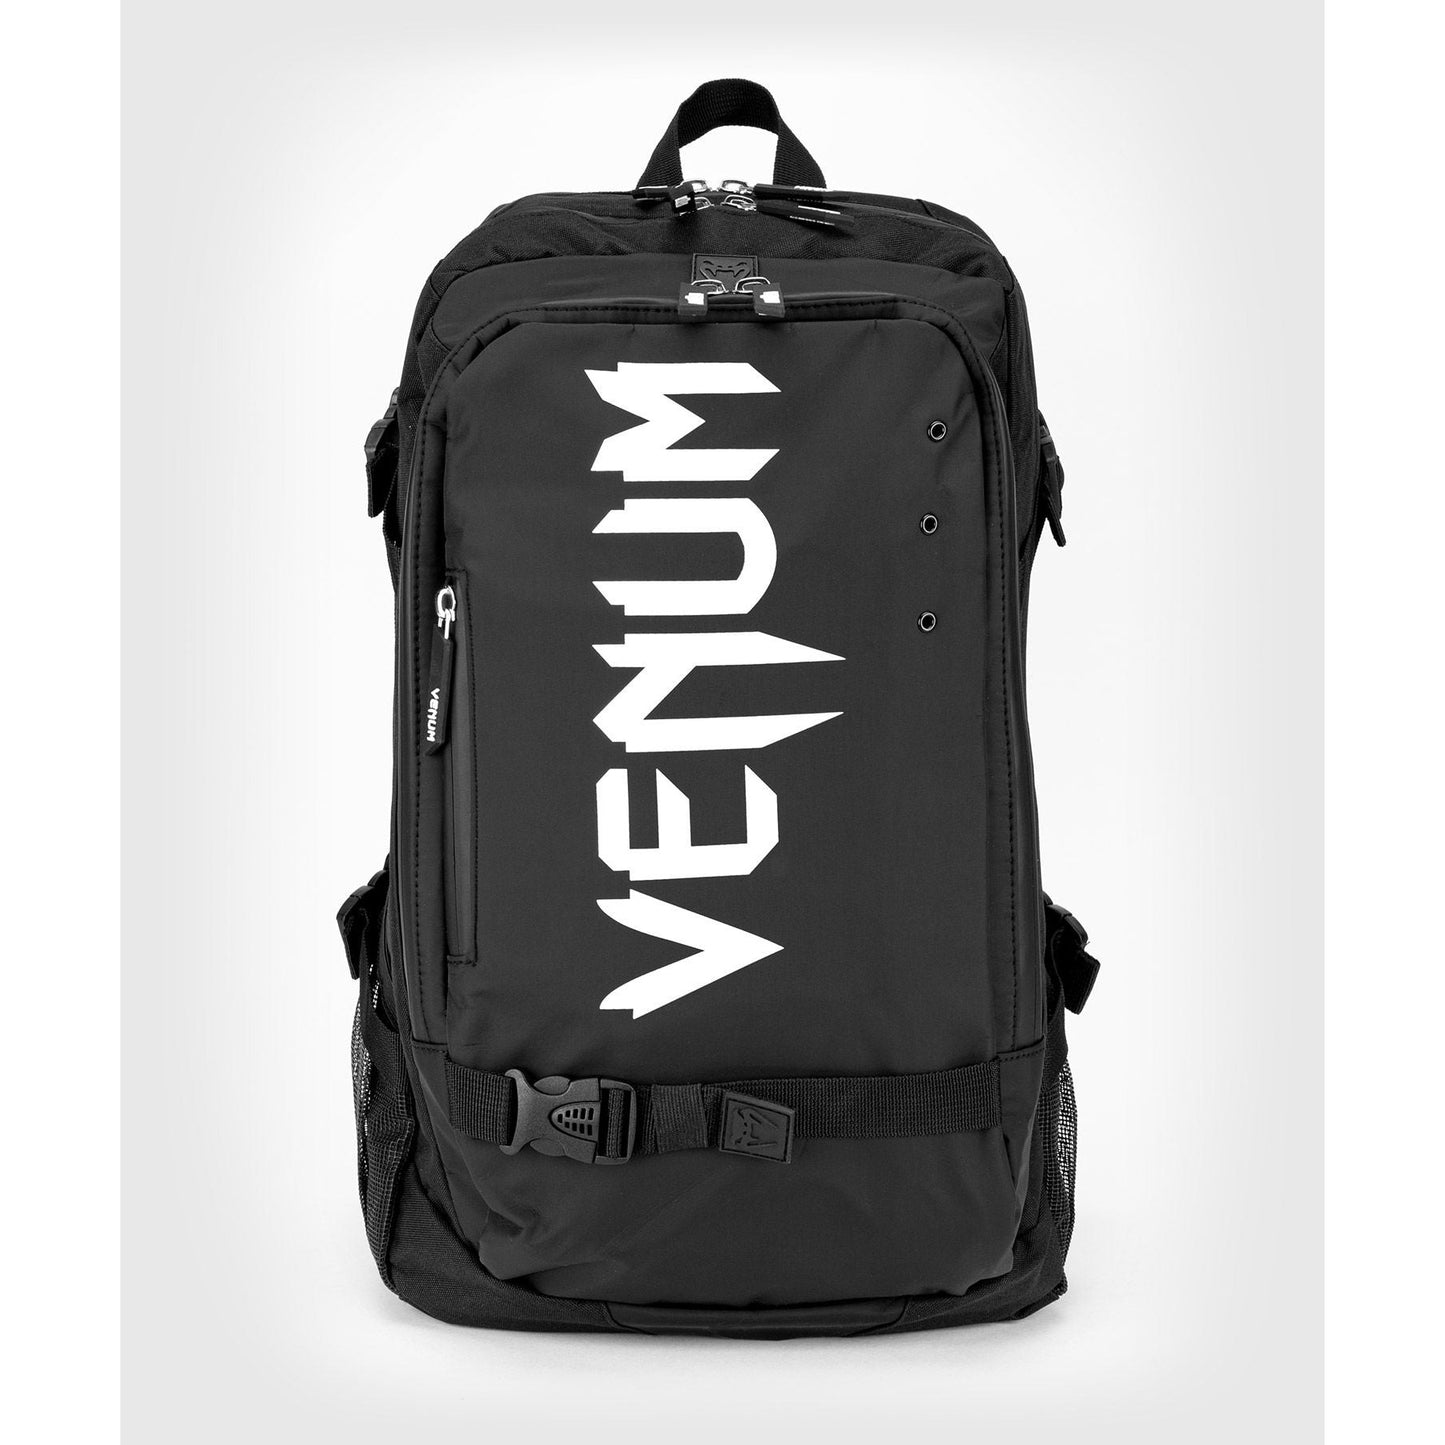 Venum Challenger Pro Evo Backpack - Black/White